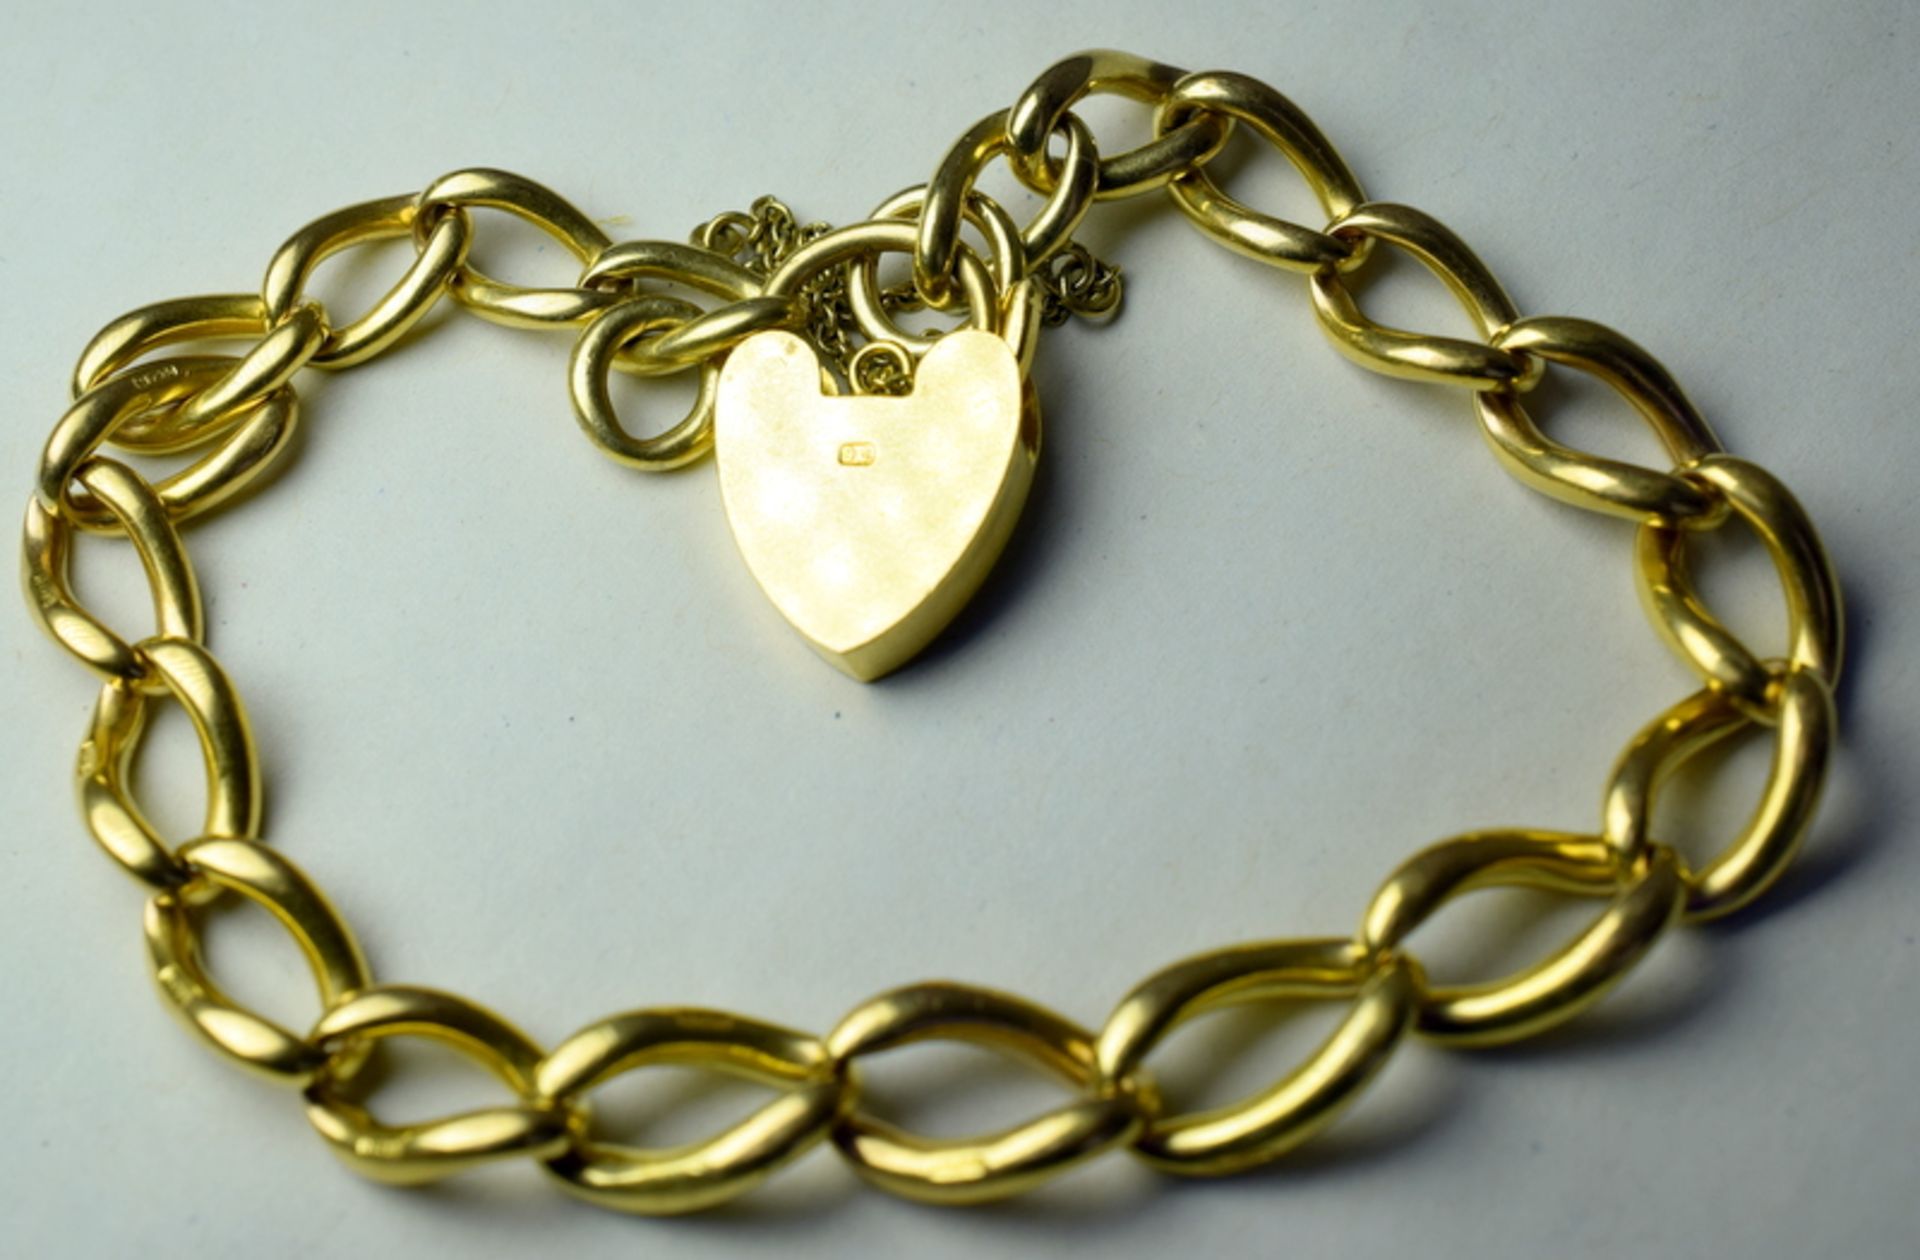 Vintage Large Link 9ct Gold Bracelet With Heart Shape Padlock Clasp - Image 6 of 7